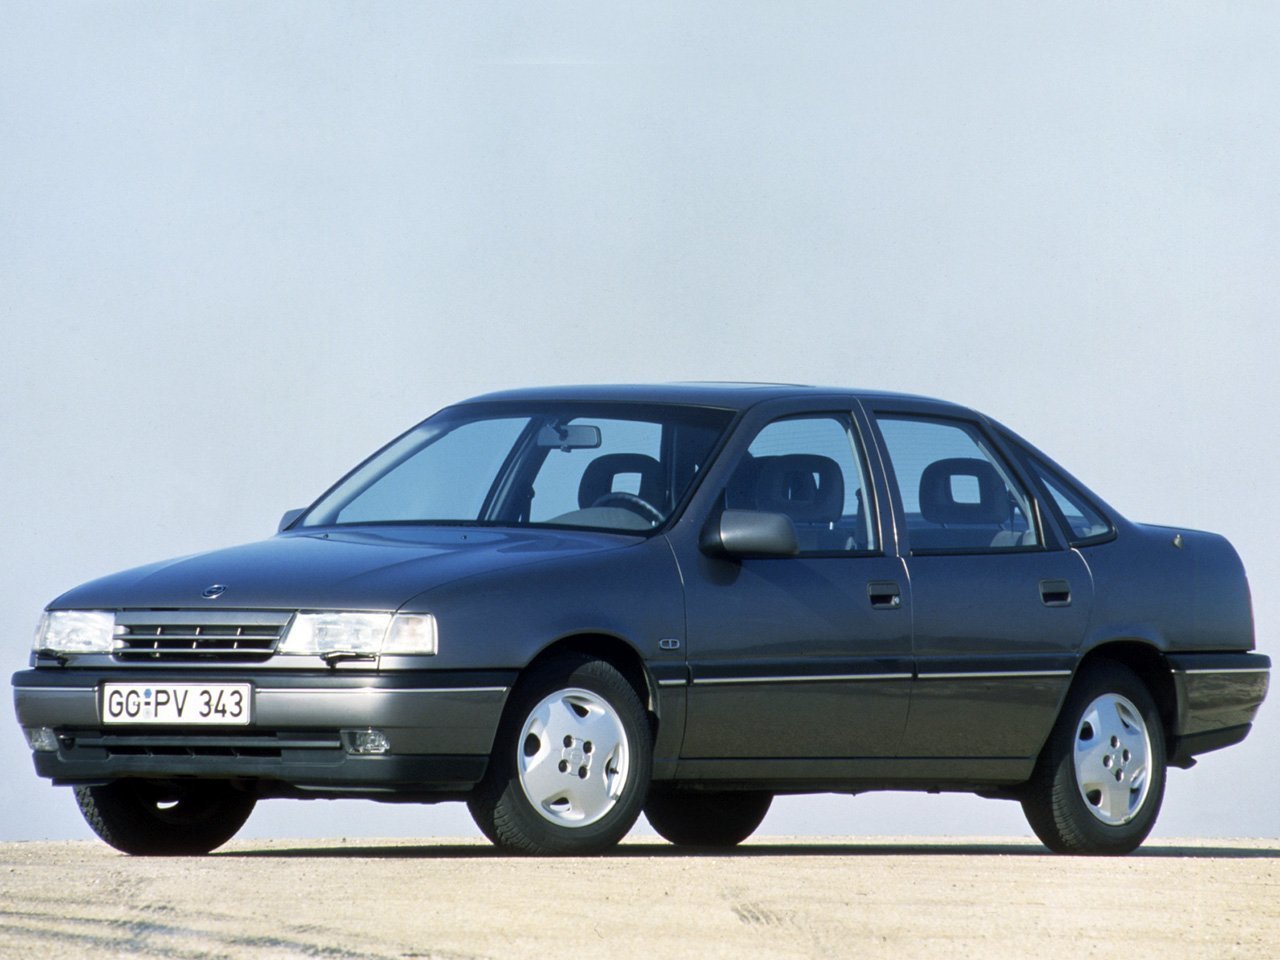 Расход газа десяти комплектаций седана Opel Vectra. Разница стоимости заправки газом и бензином. Автономный пробег до и после установки ГБО.